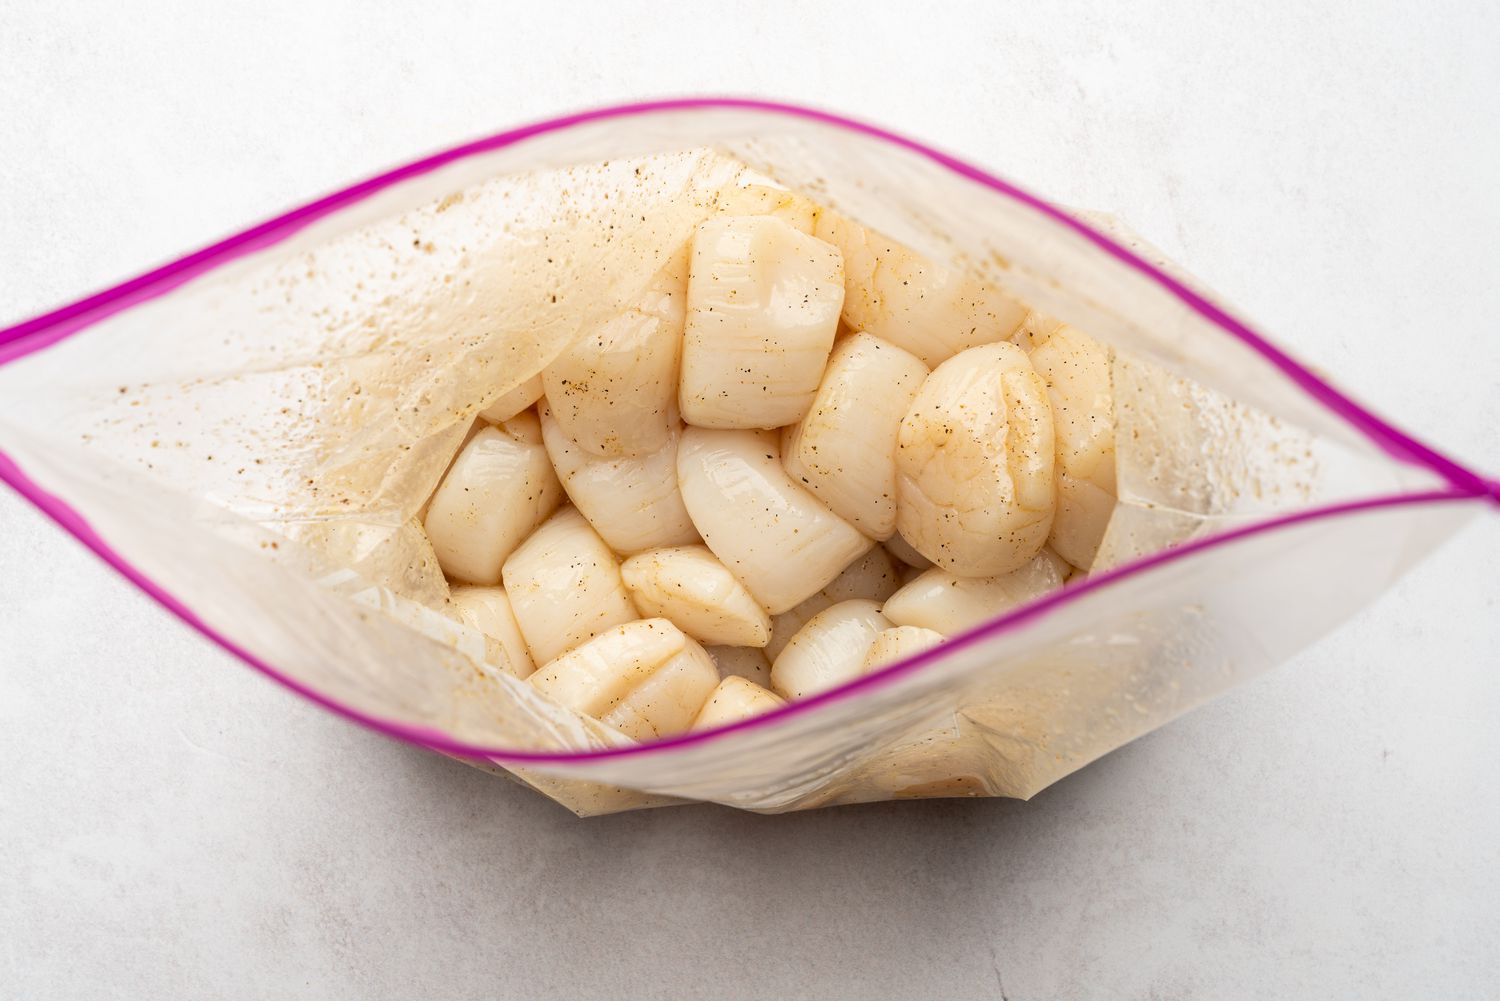 scallops and seasonings in a plastic bag 